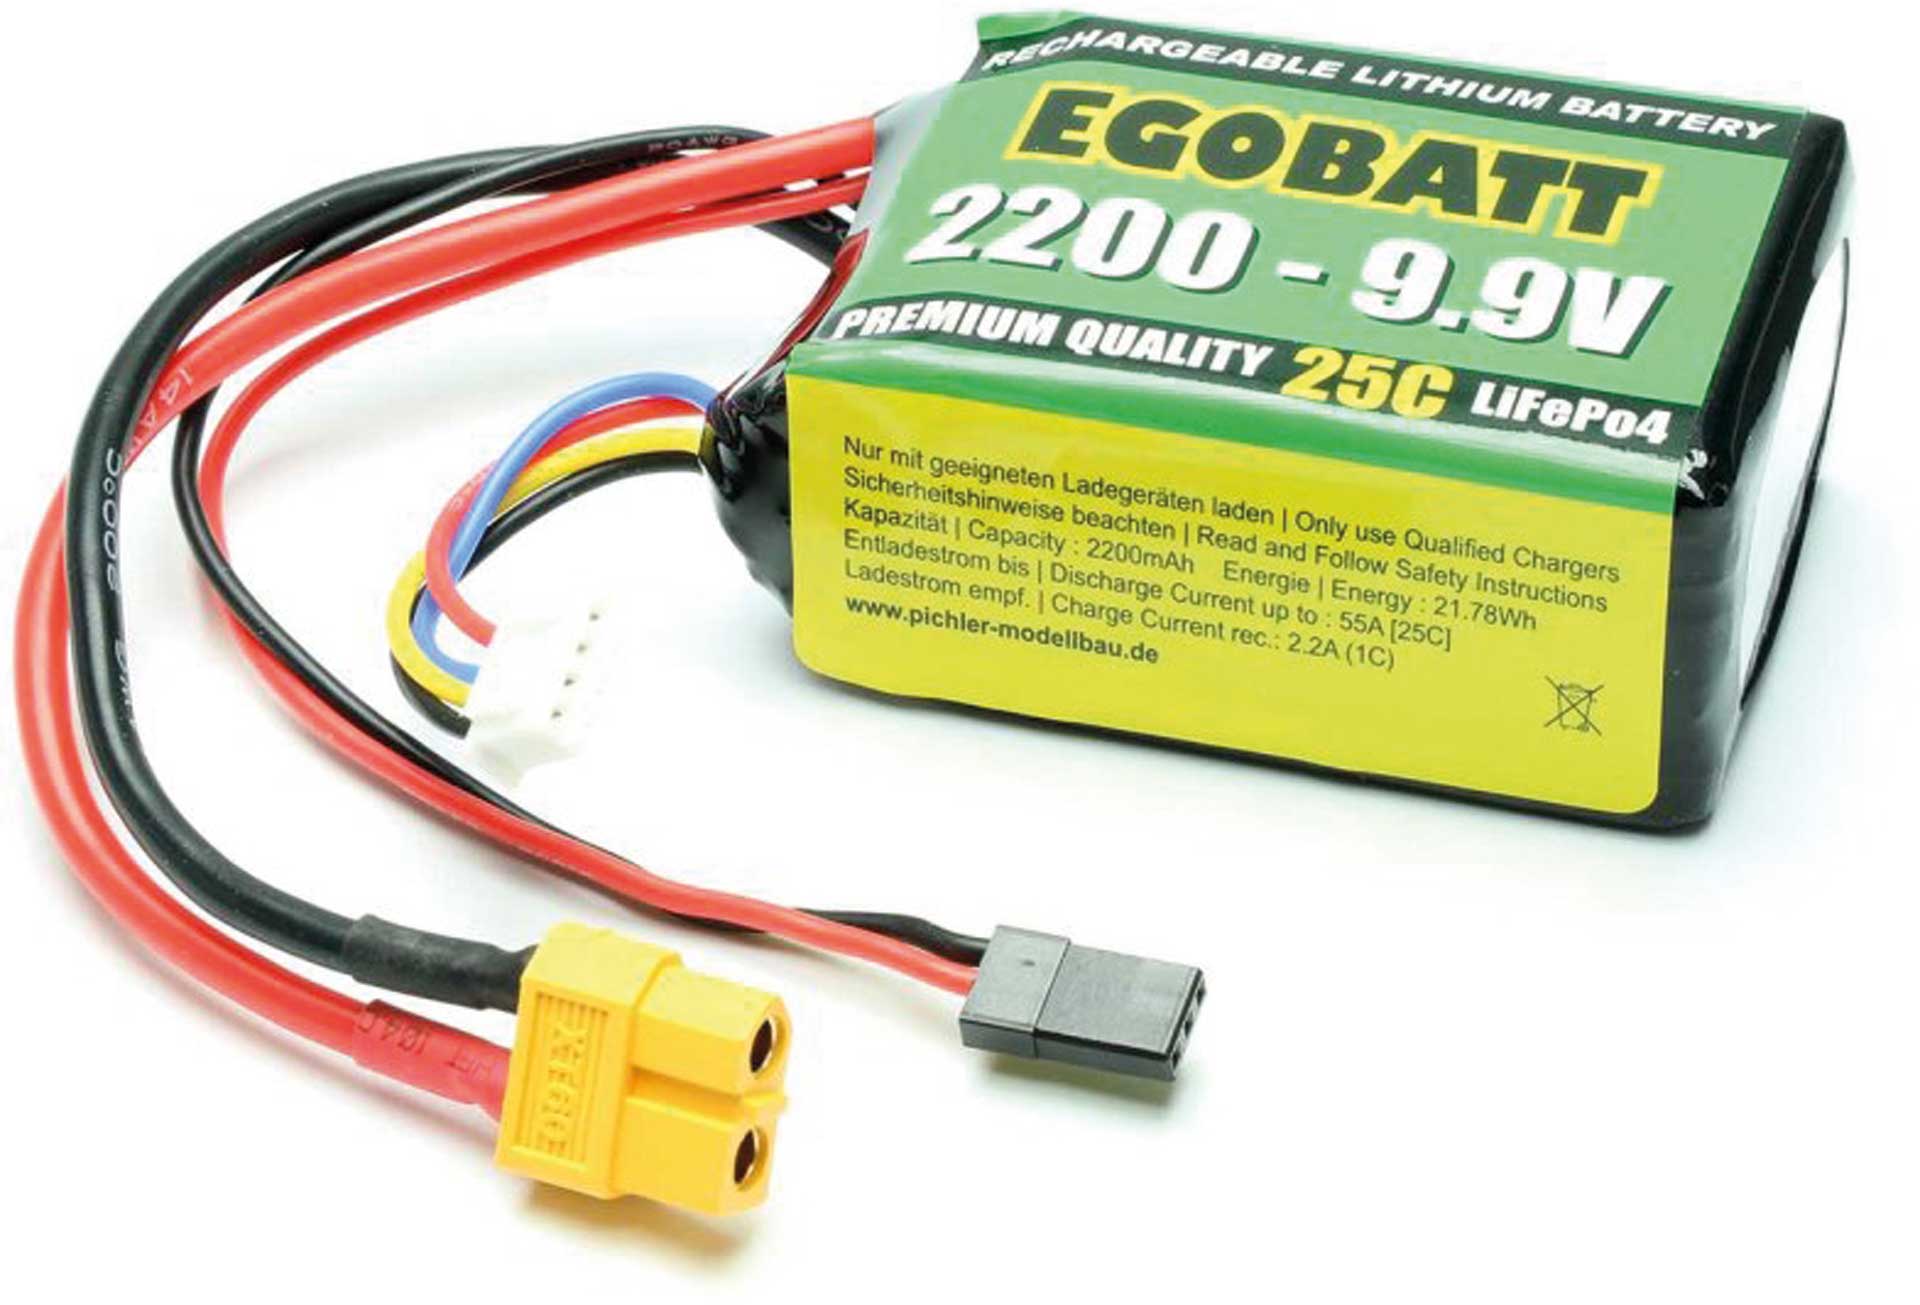 Pichler LiFe battery EGOBATT 2200 - 9.9V (25C)